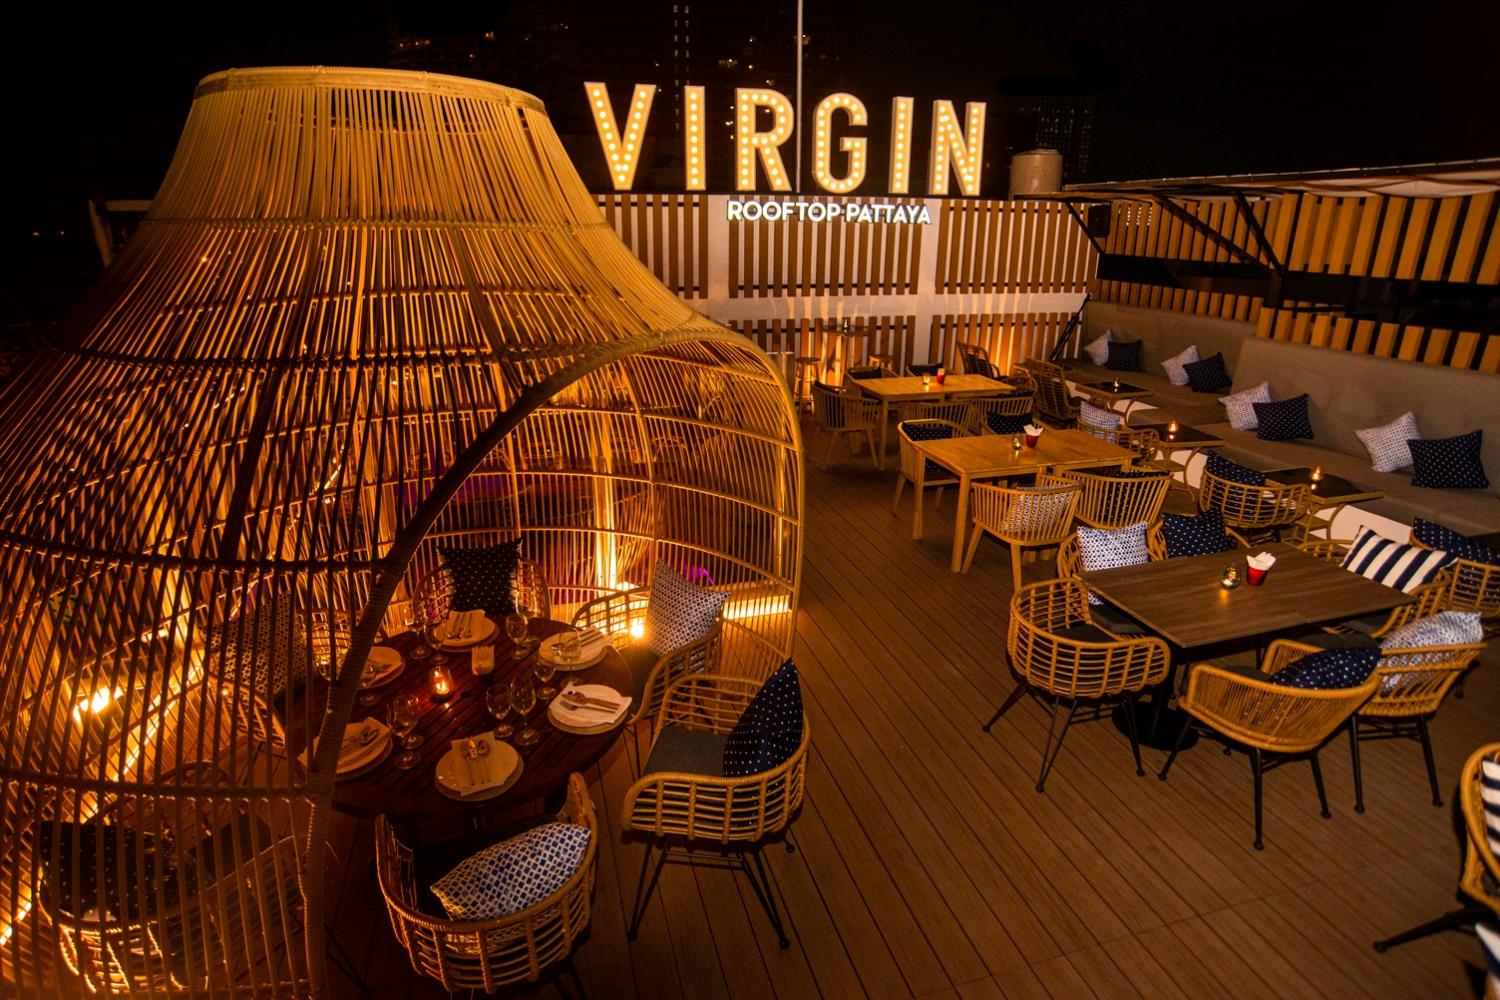 Virgin Rooftop Pattaya